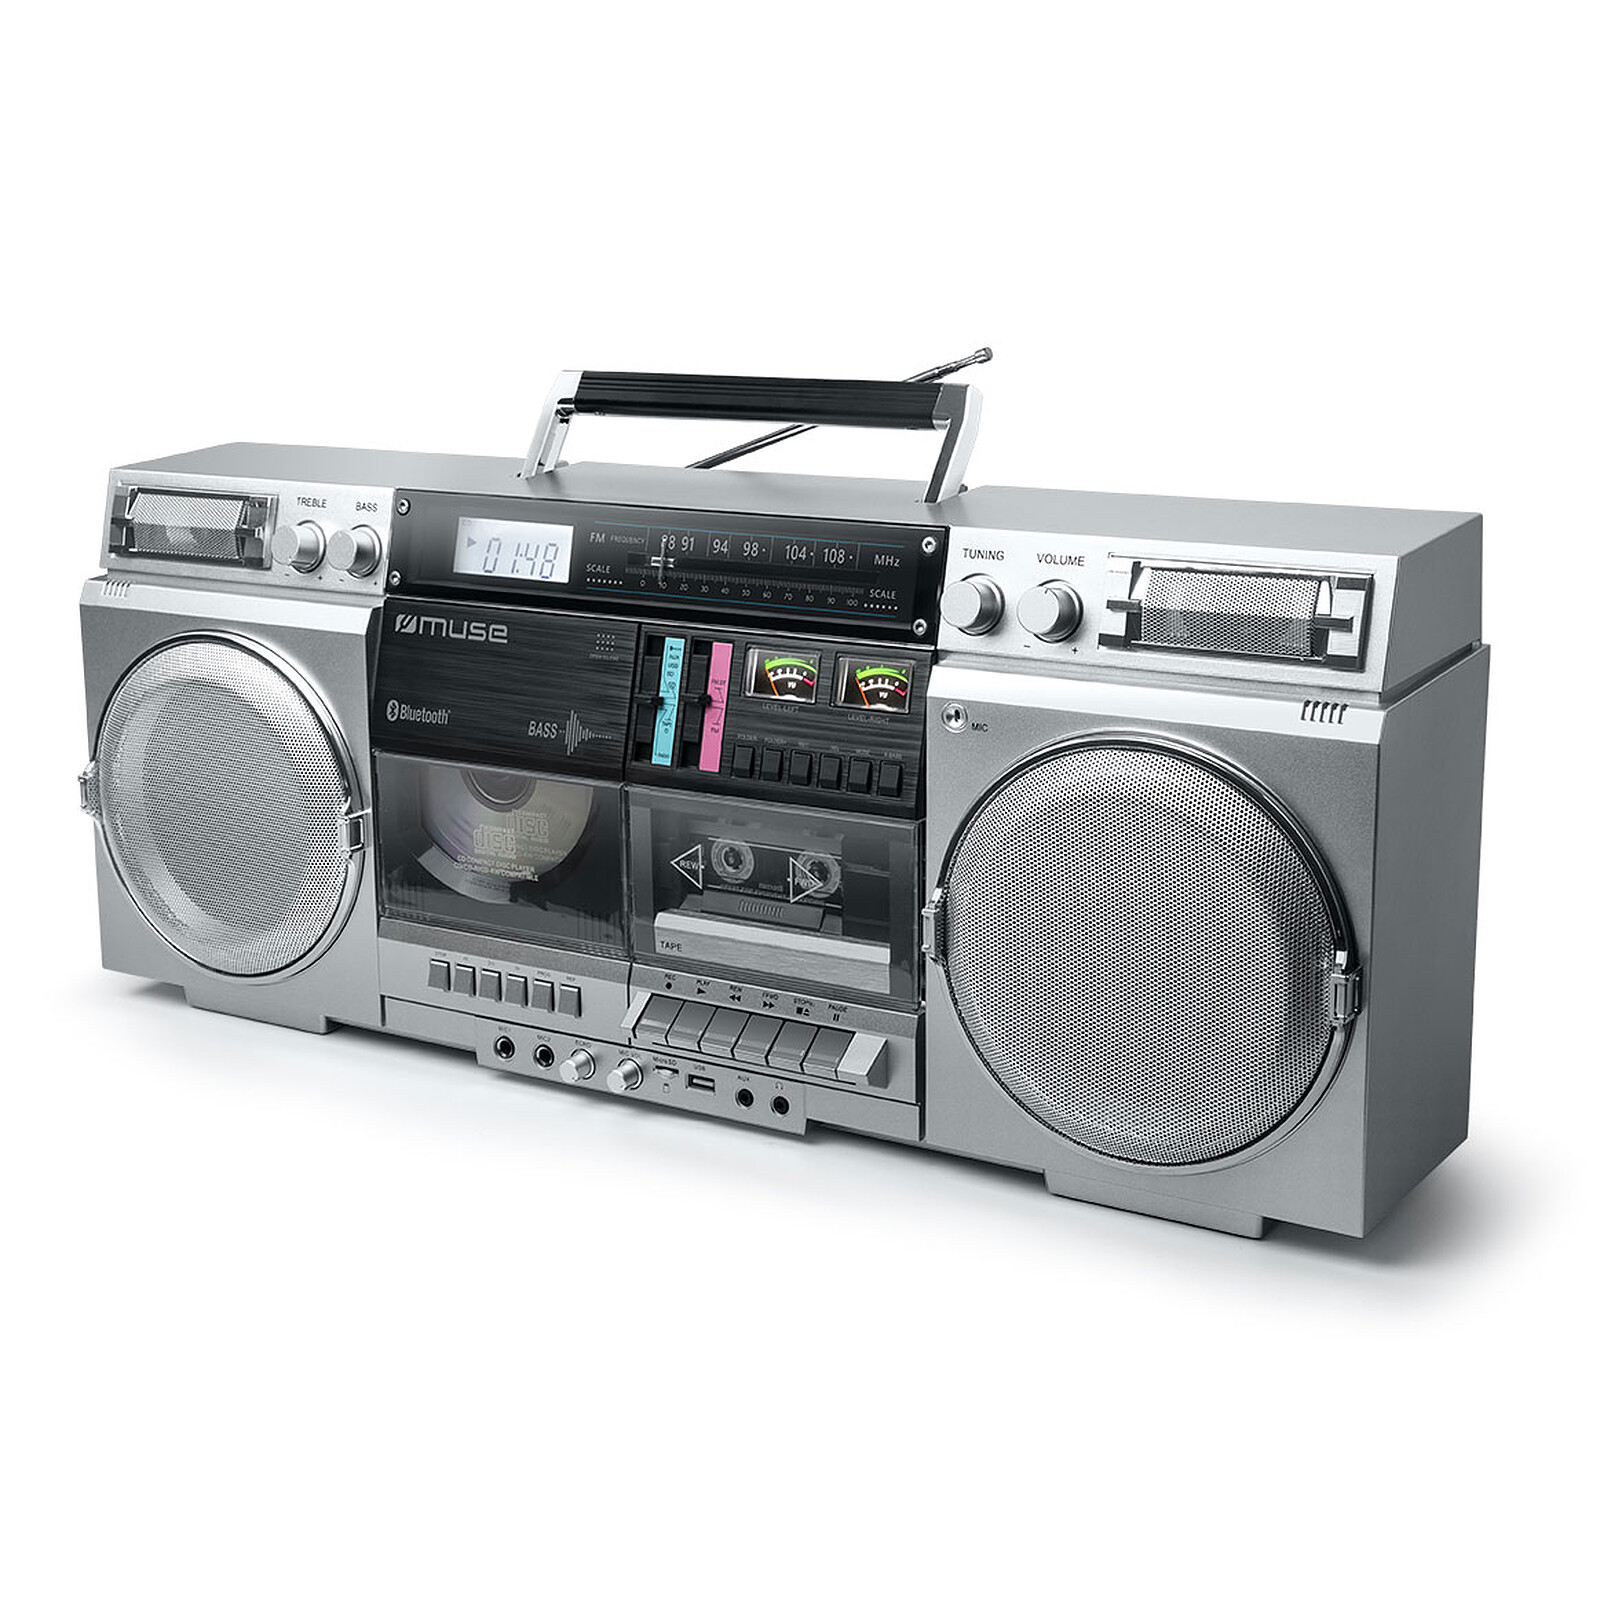 Muse M-380 GBS - Radio & clock radio - LDLC 3-year warranty